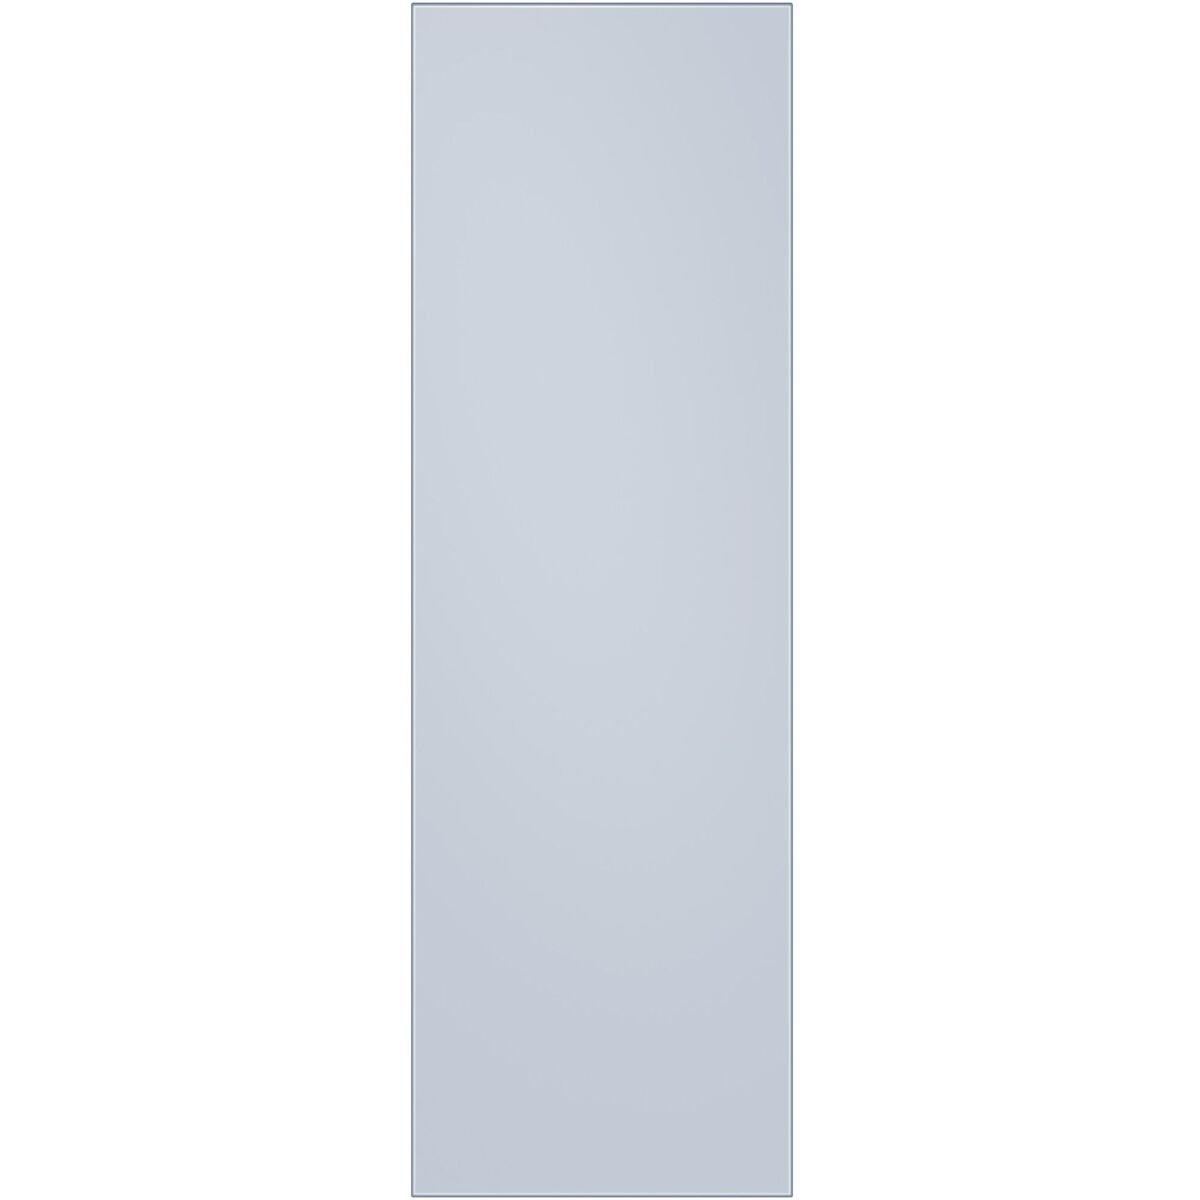 Samsung RA-R23DAA48/AE Door Panel Satin Skyblue Color For Bespoke Single Door Refrigerator